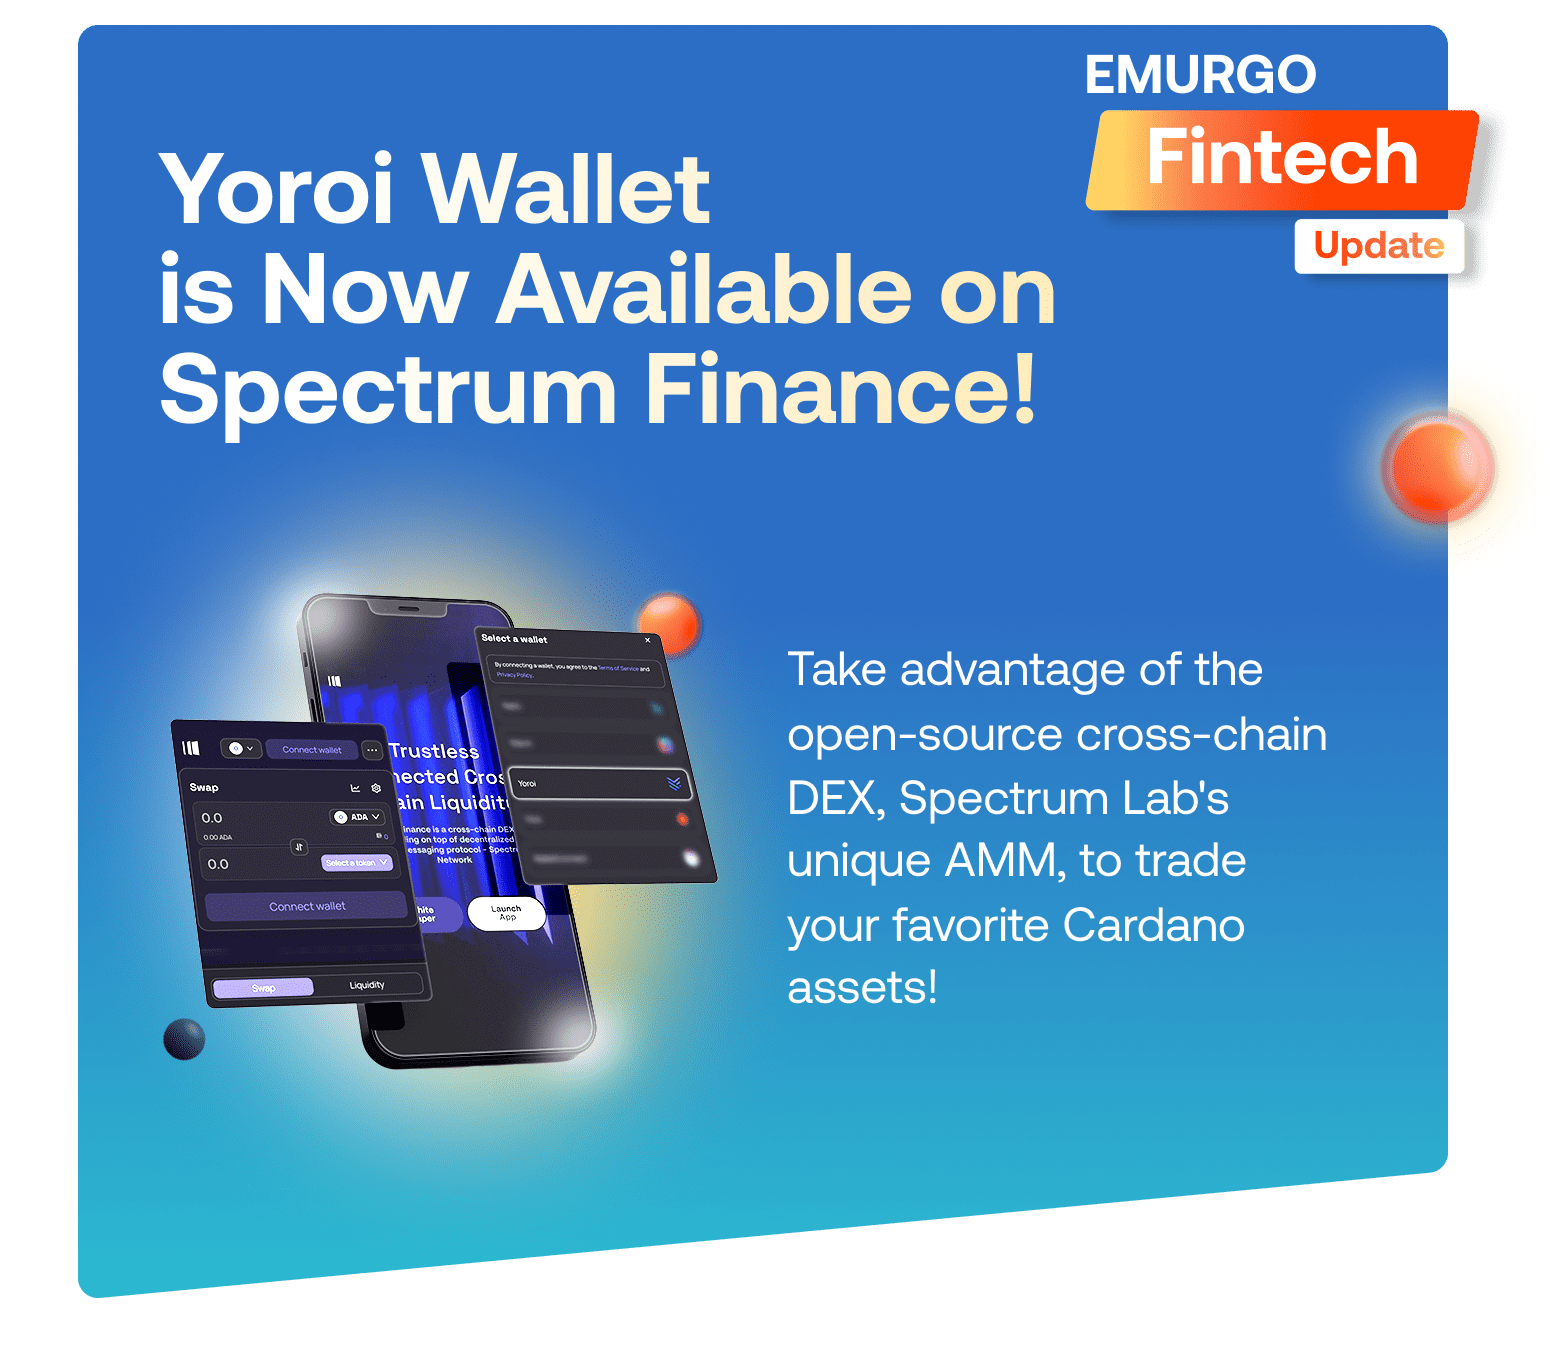 5-Blog-Fintech-Yoroi-Wallet